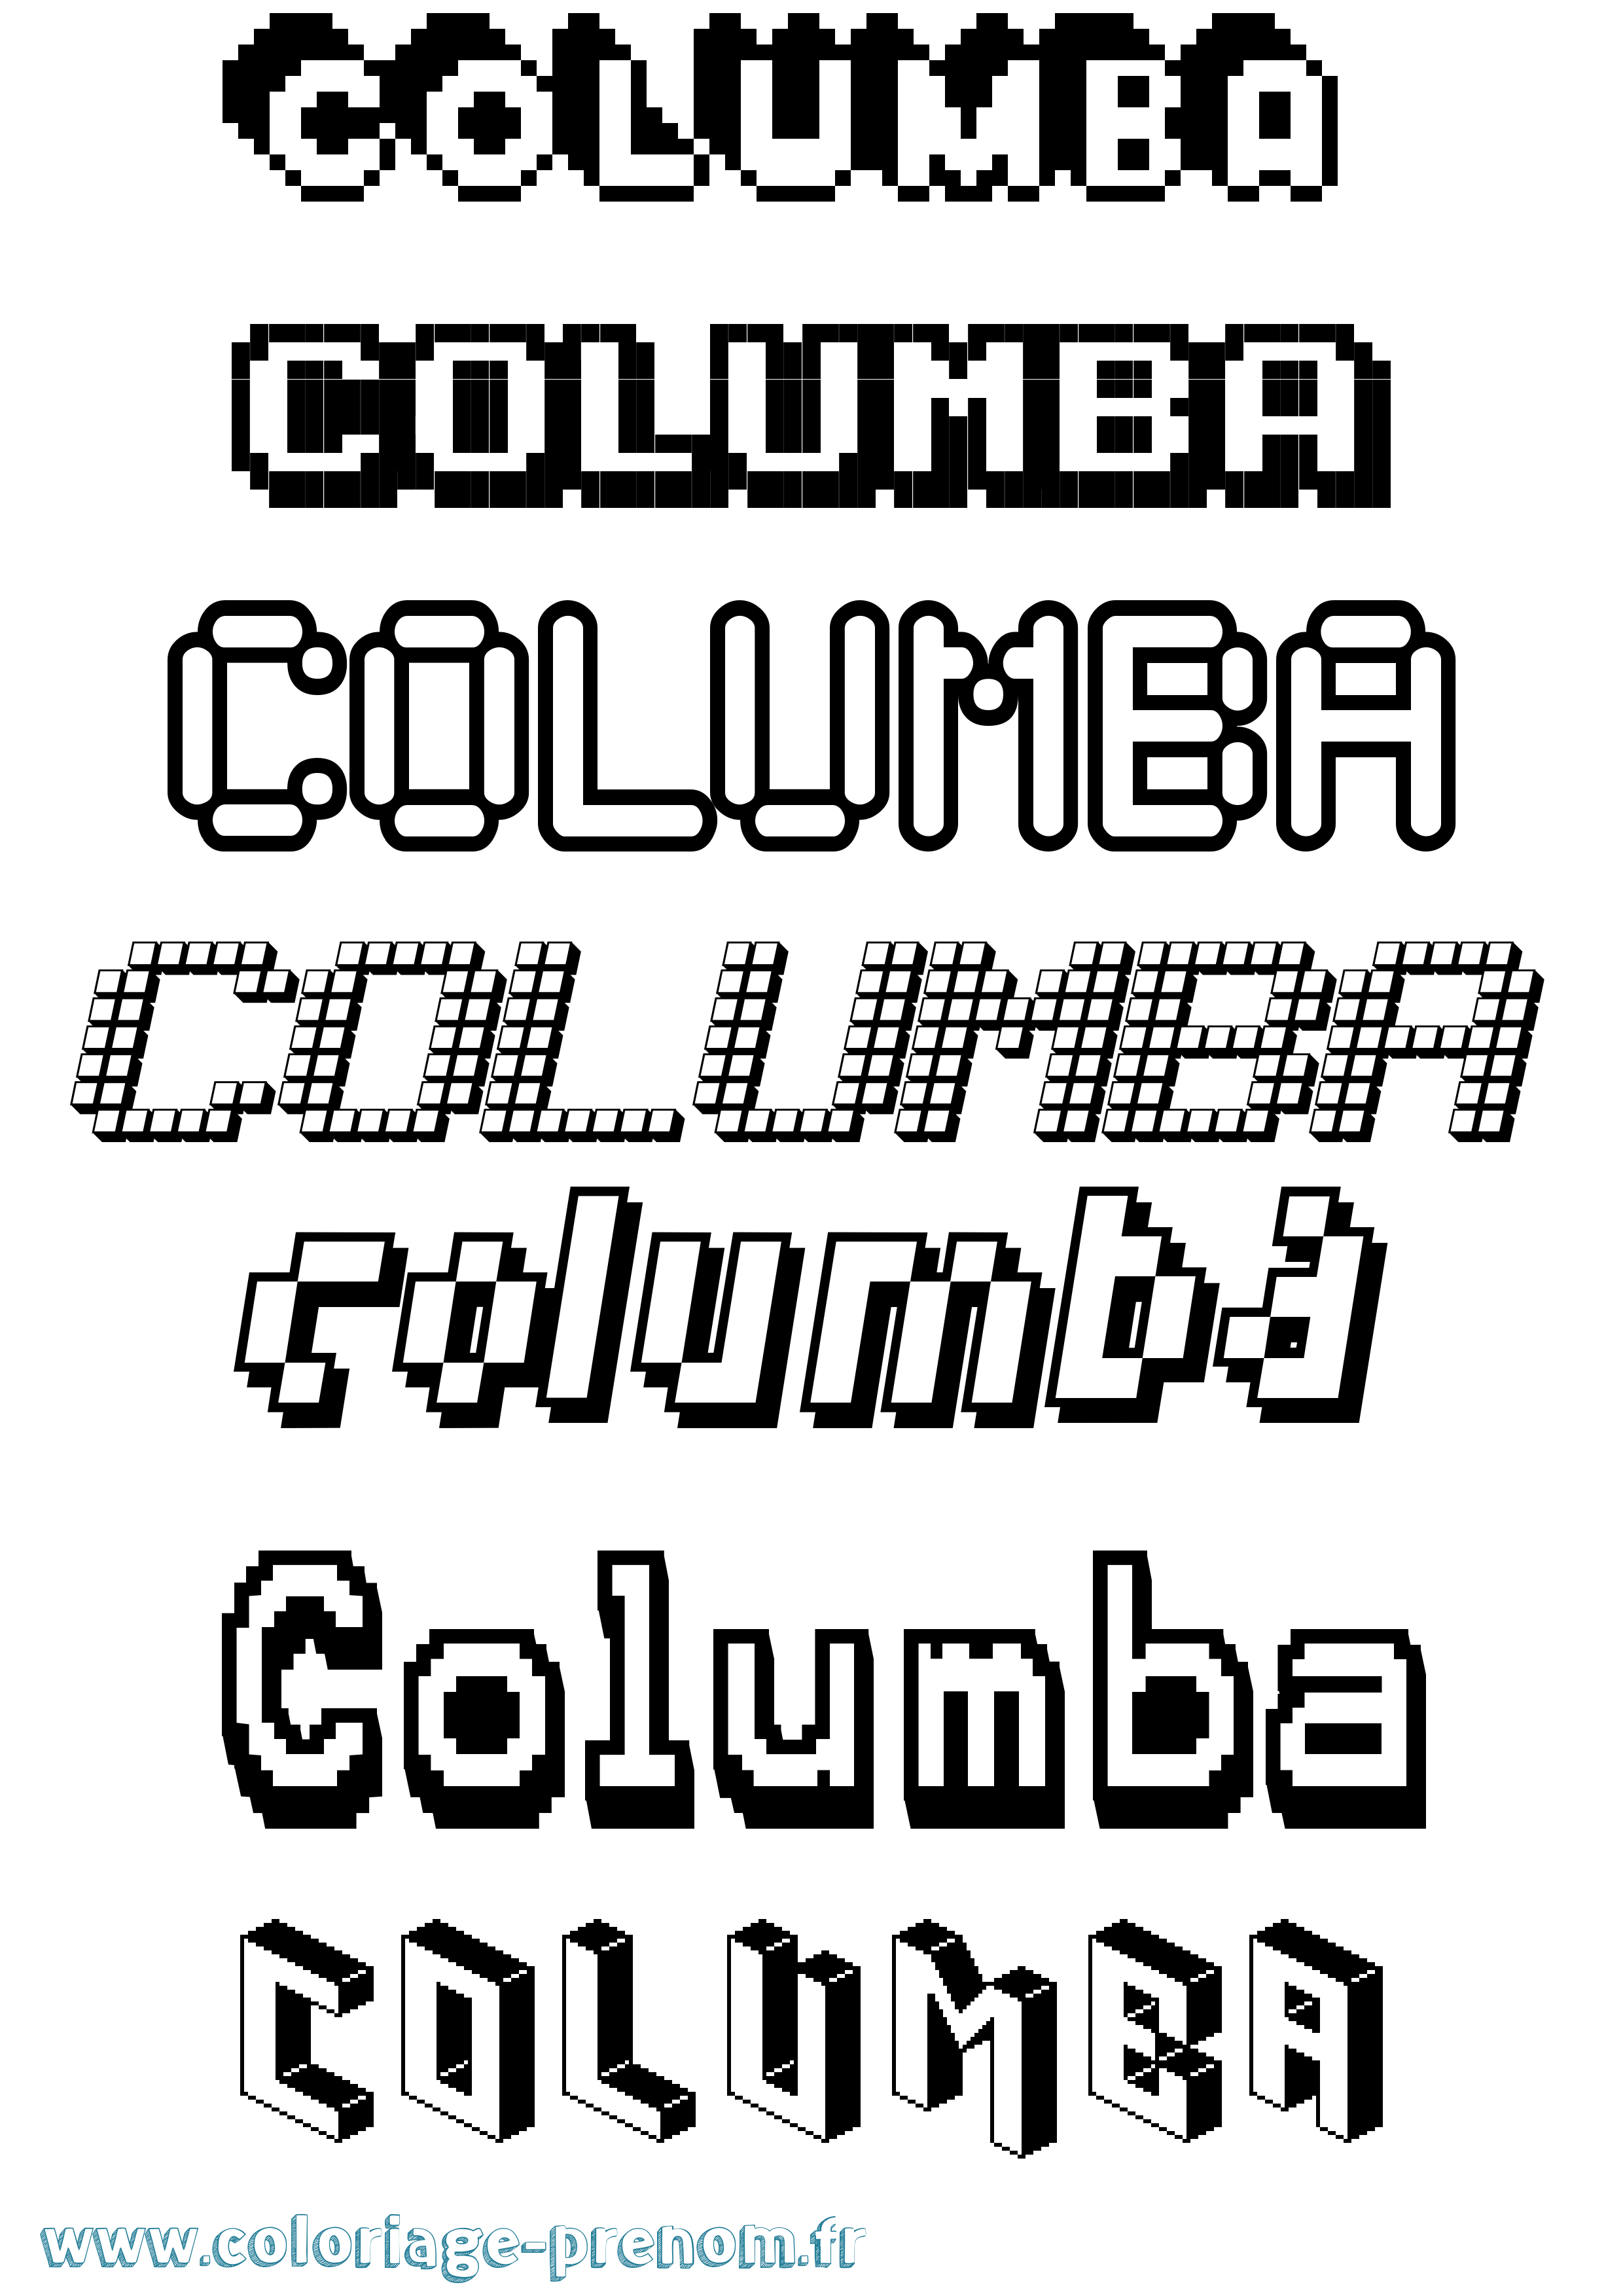 Coloriage prénom Columba Pixel